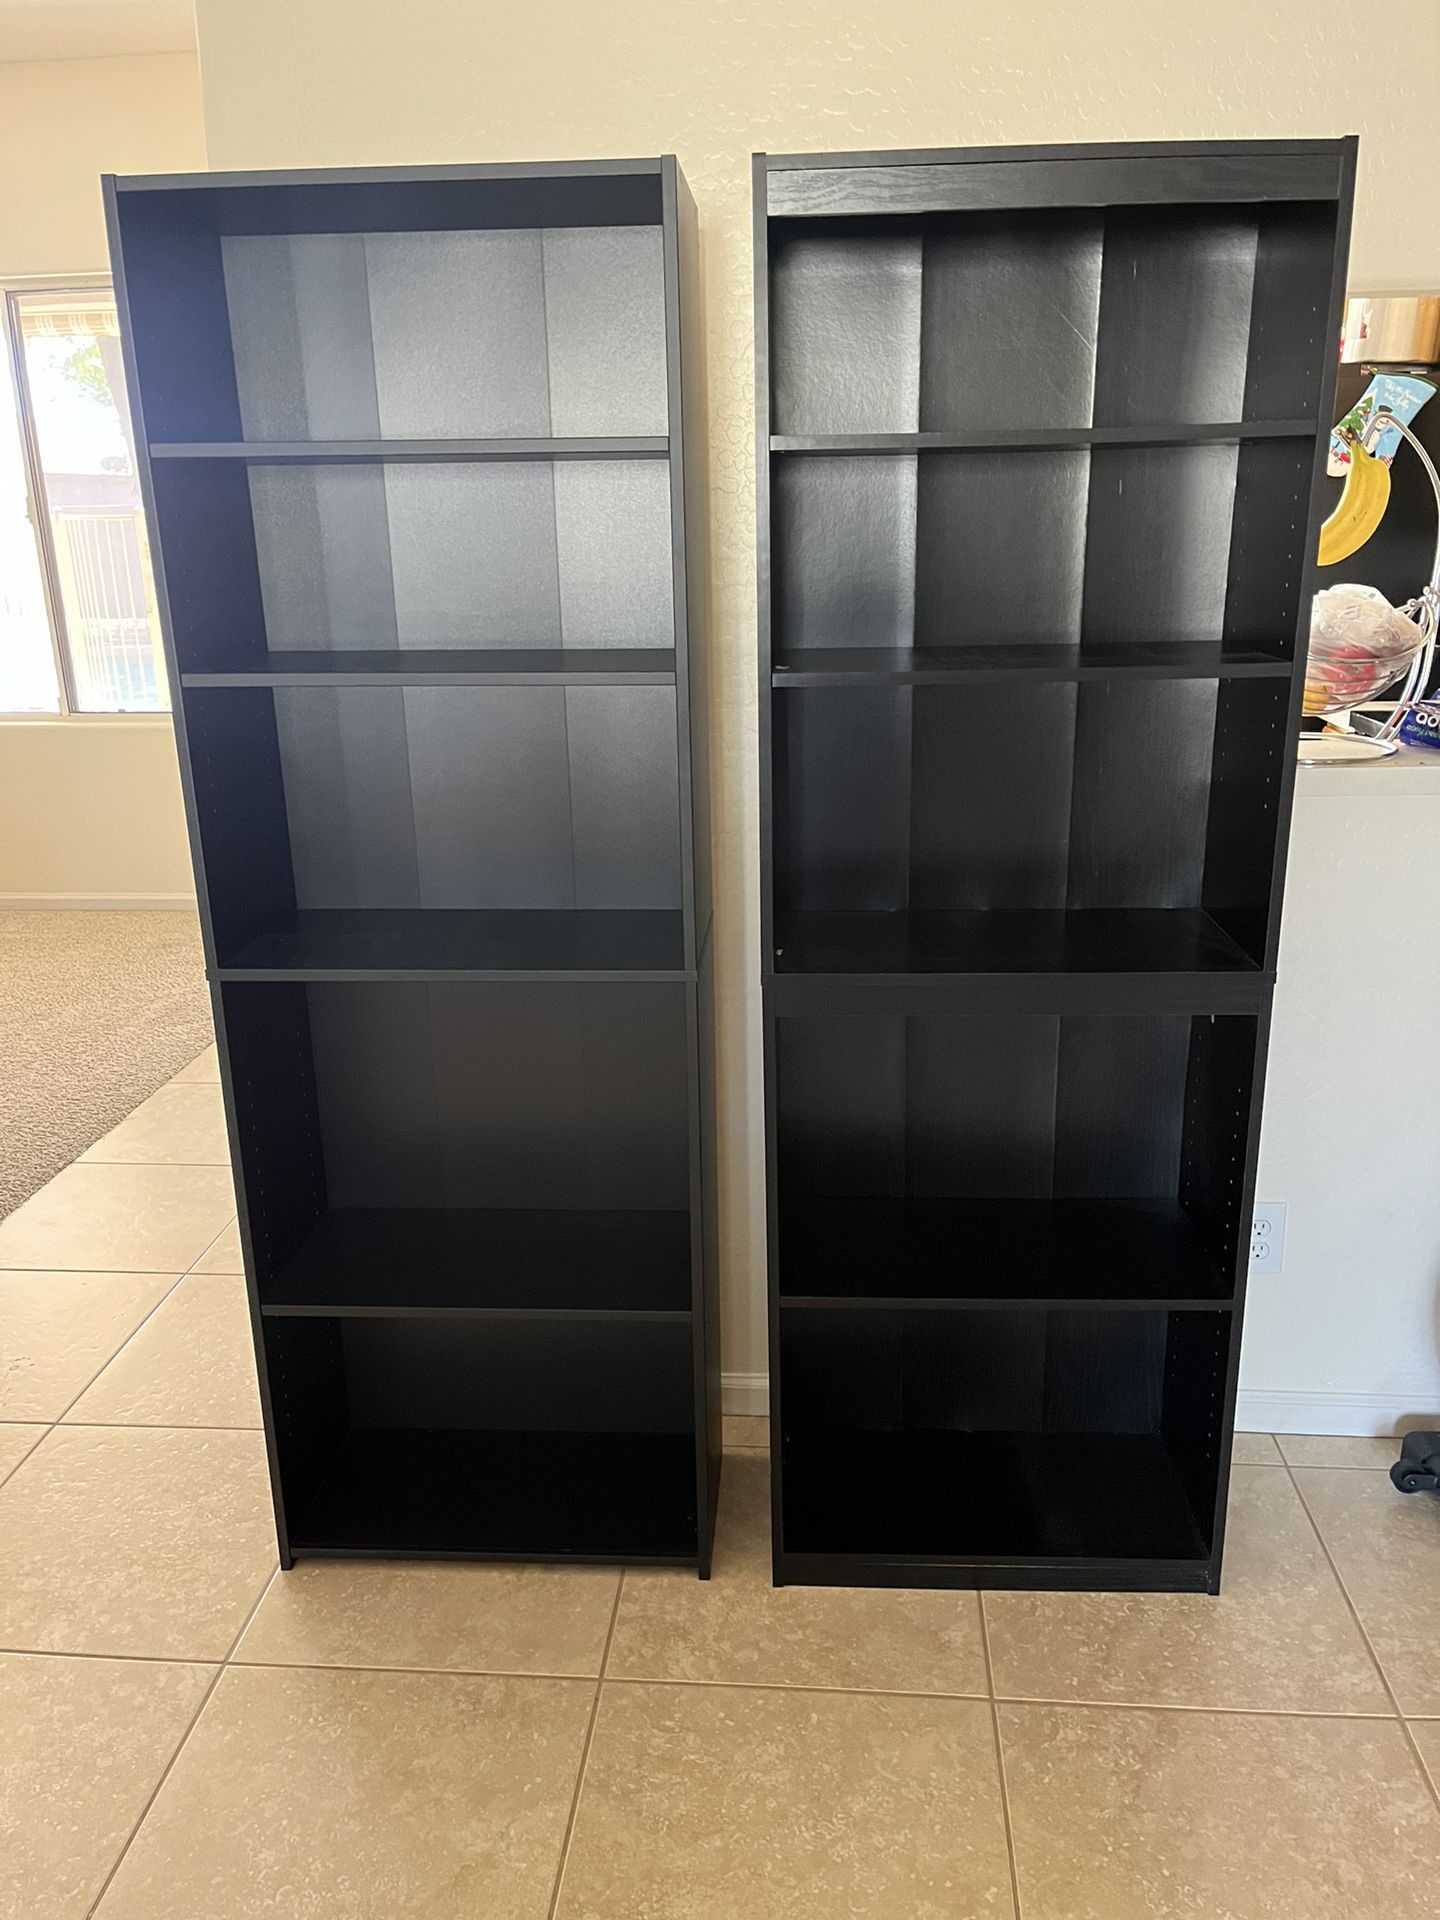 Two Black Bookshelves 6’x2’